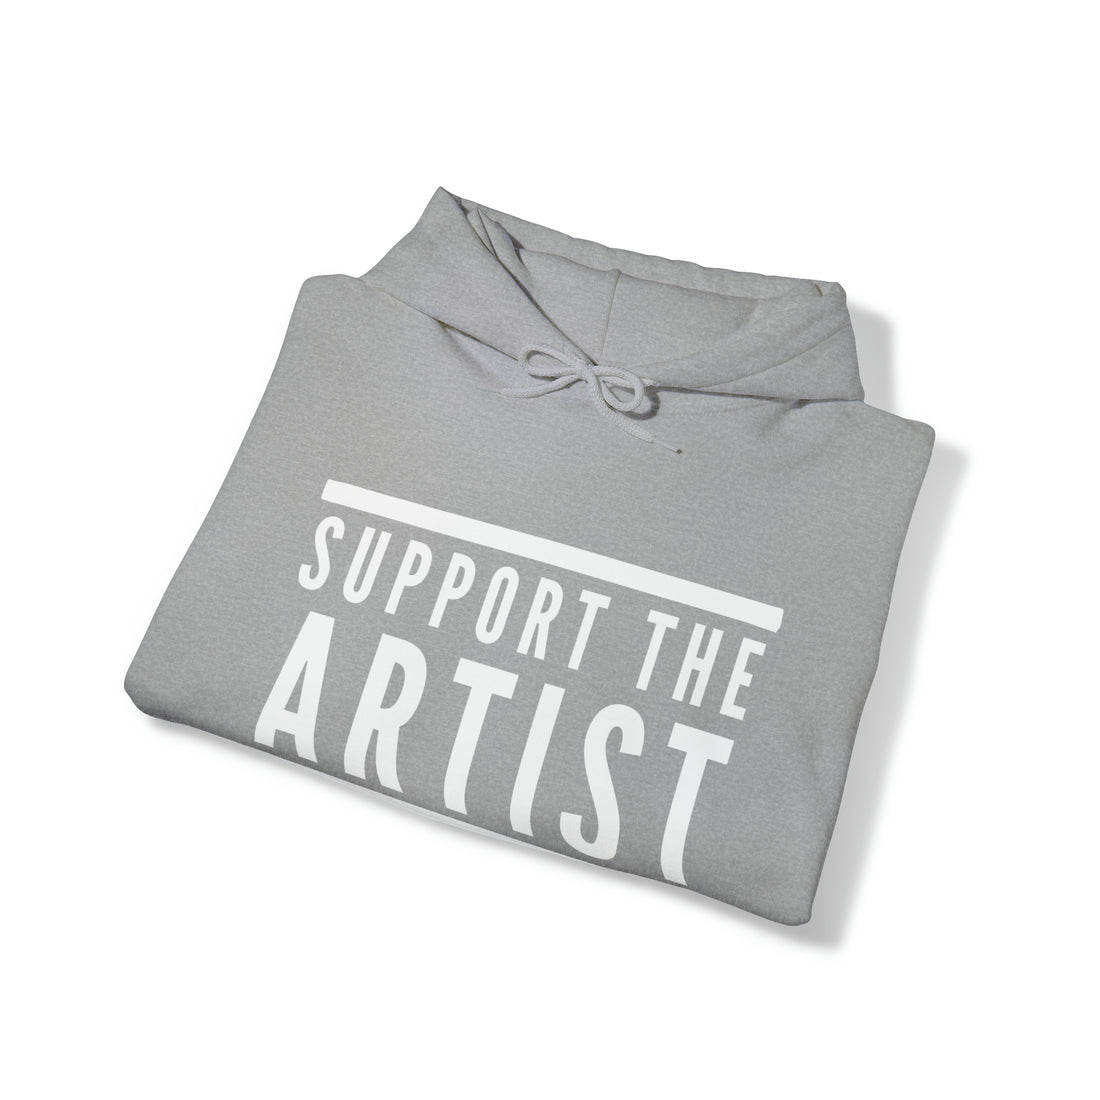 Support the Artist Hoodie, Unisex Heavy Hooded Sweatshirt